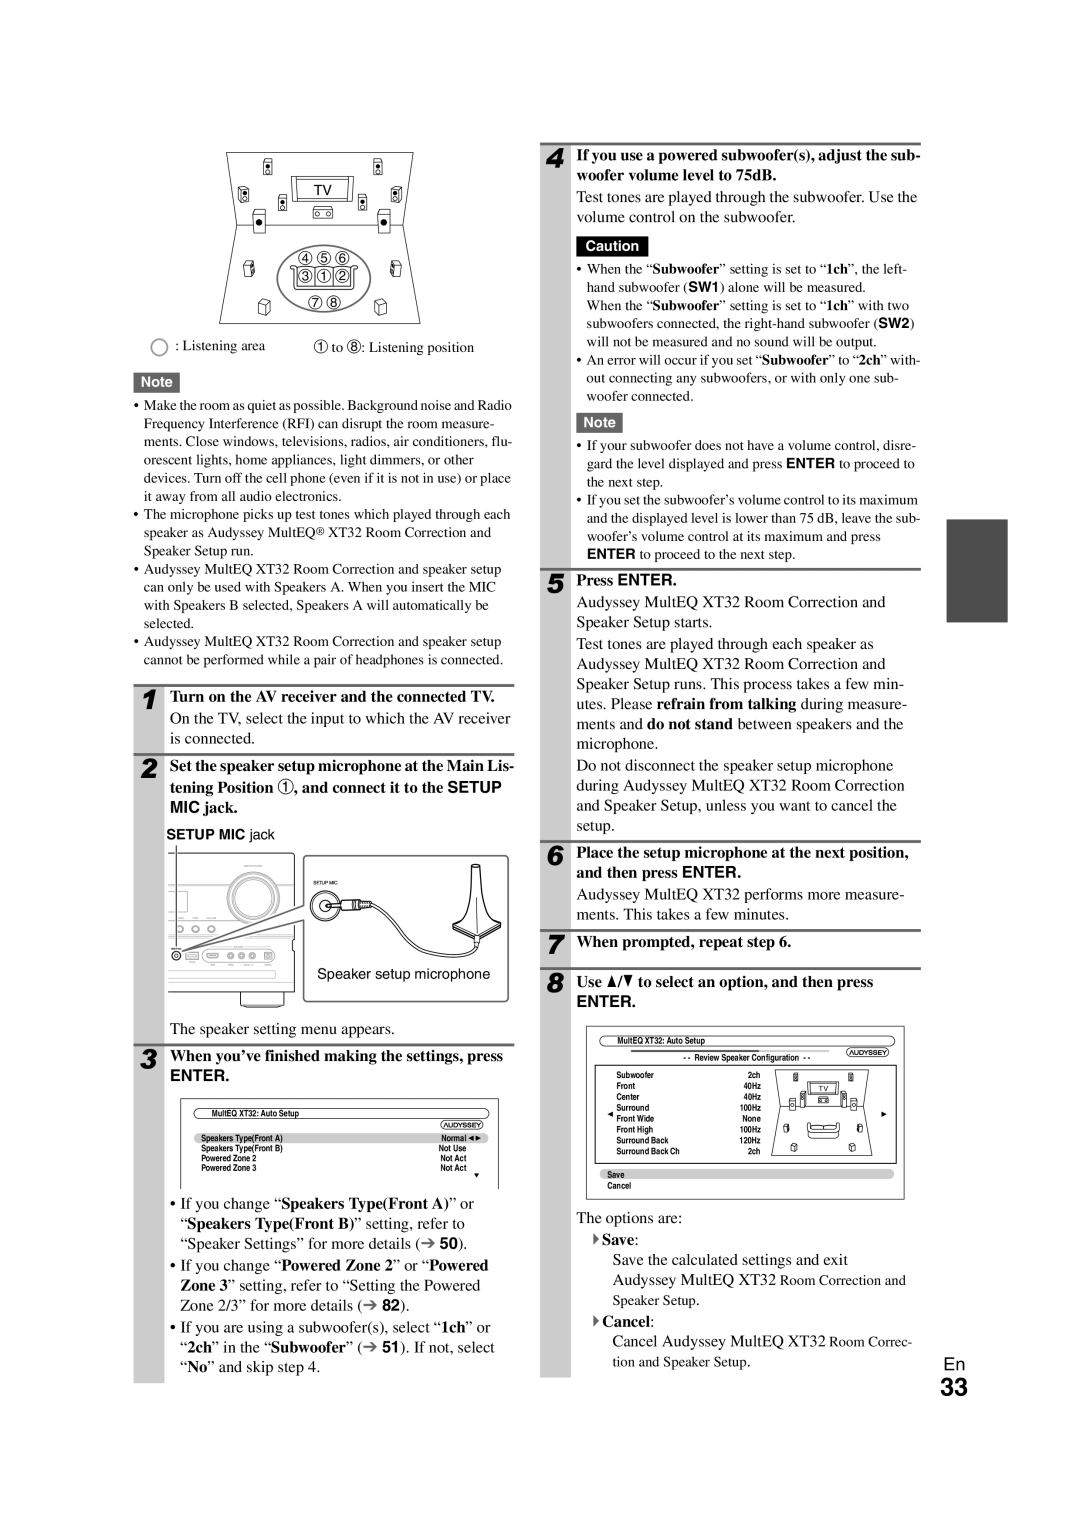 Onkyo TX-NR3008 instruction manual Enter 